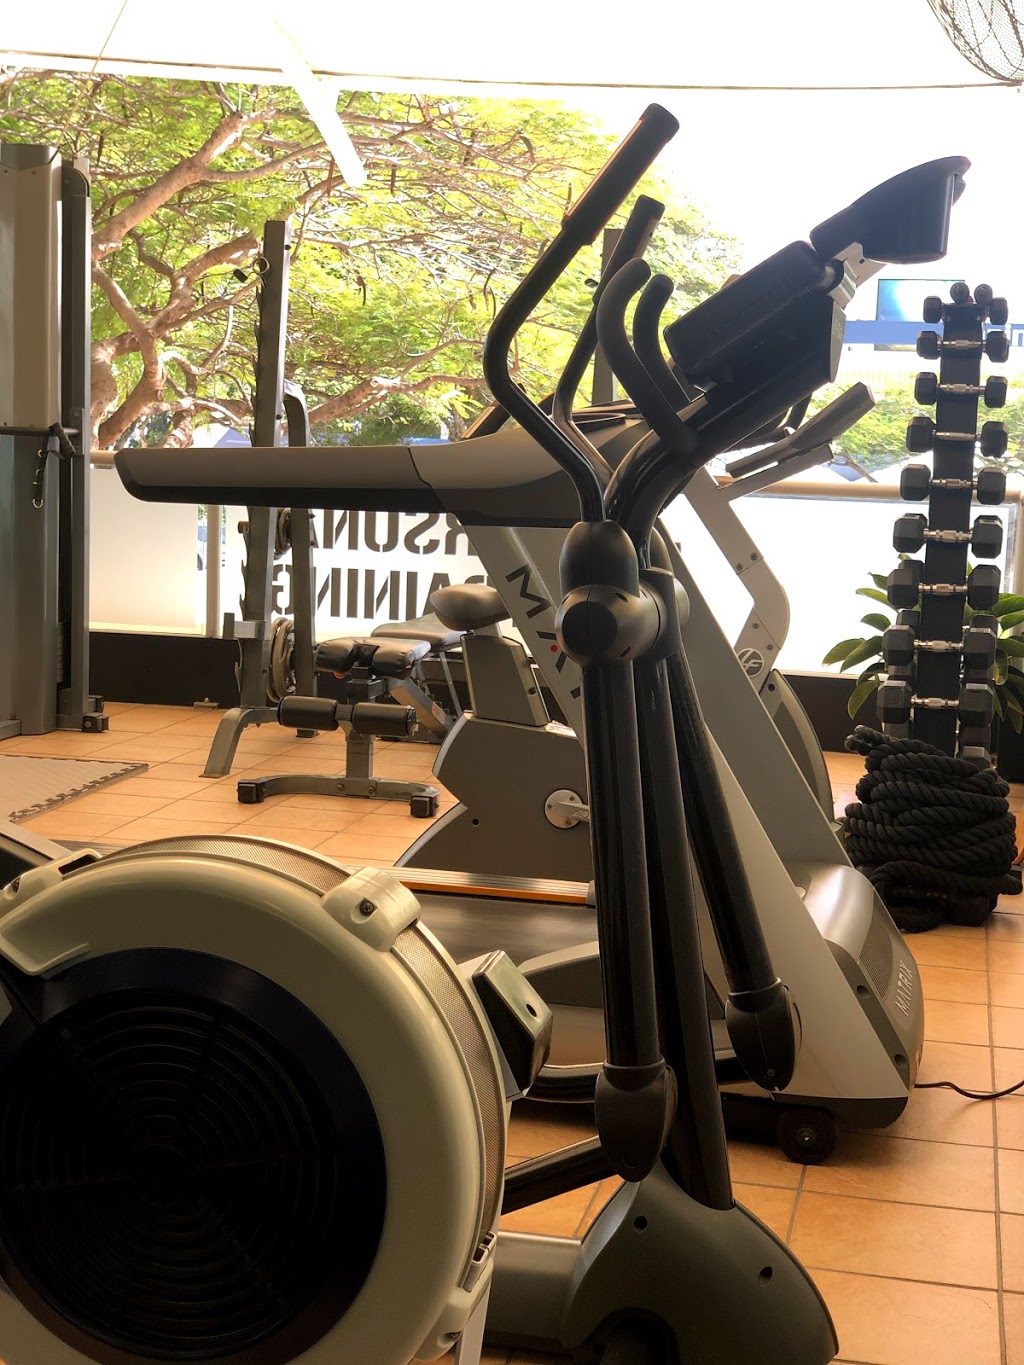 Fitness World Personal Training Studio | health | 17 Tedder Ave, Main Beach QLD 4217, Australia | 0406693064 OR +61 406 693 064